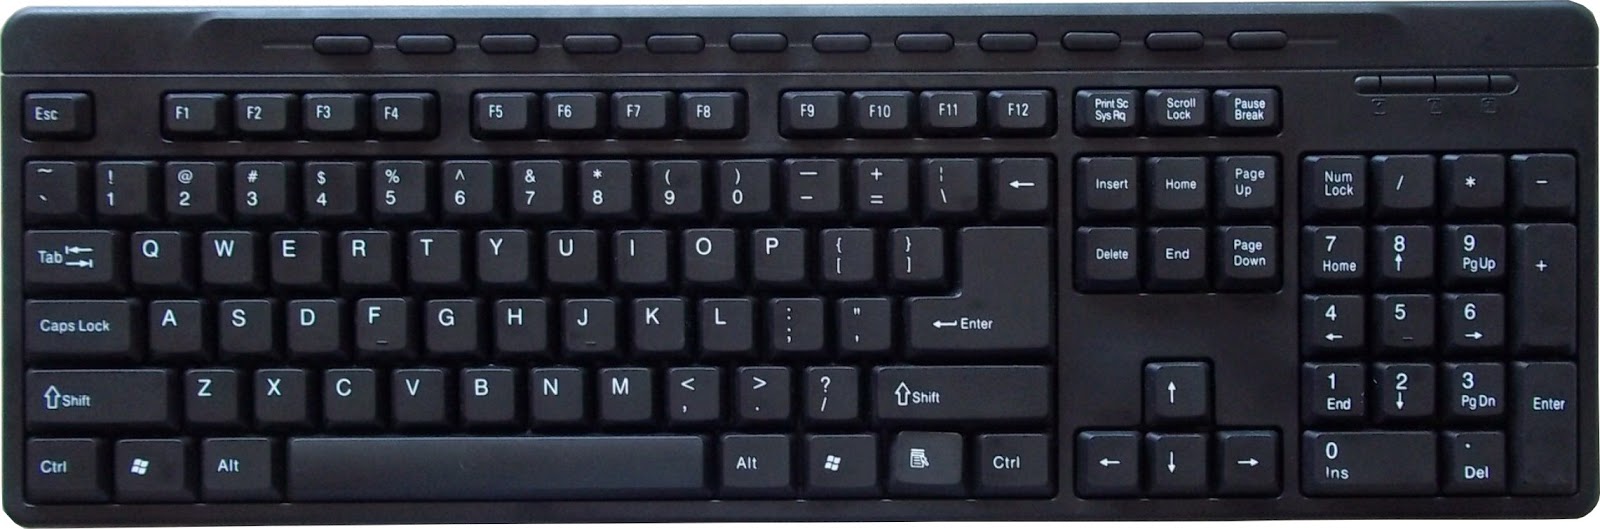 Struktur Keyboard Pada Komputer Blog Dream